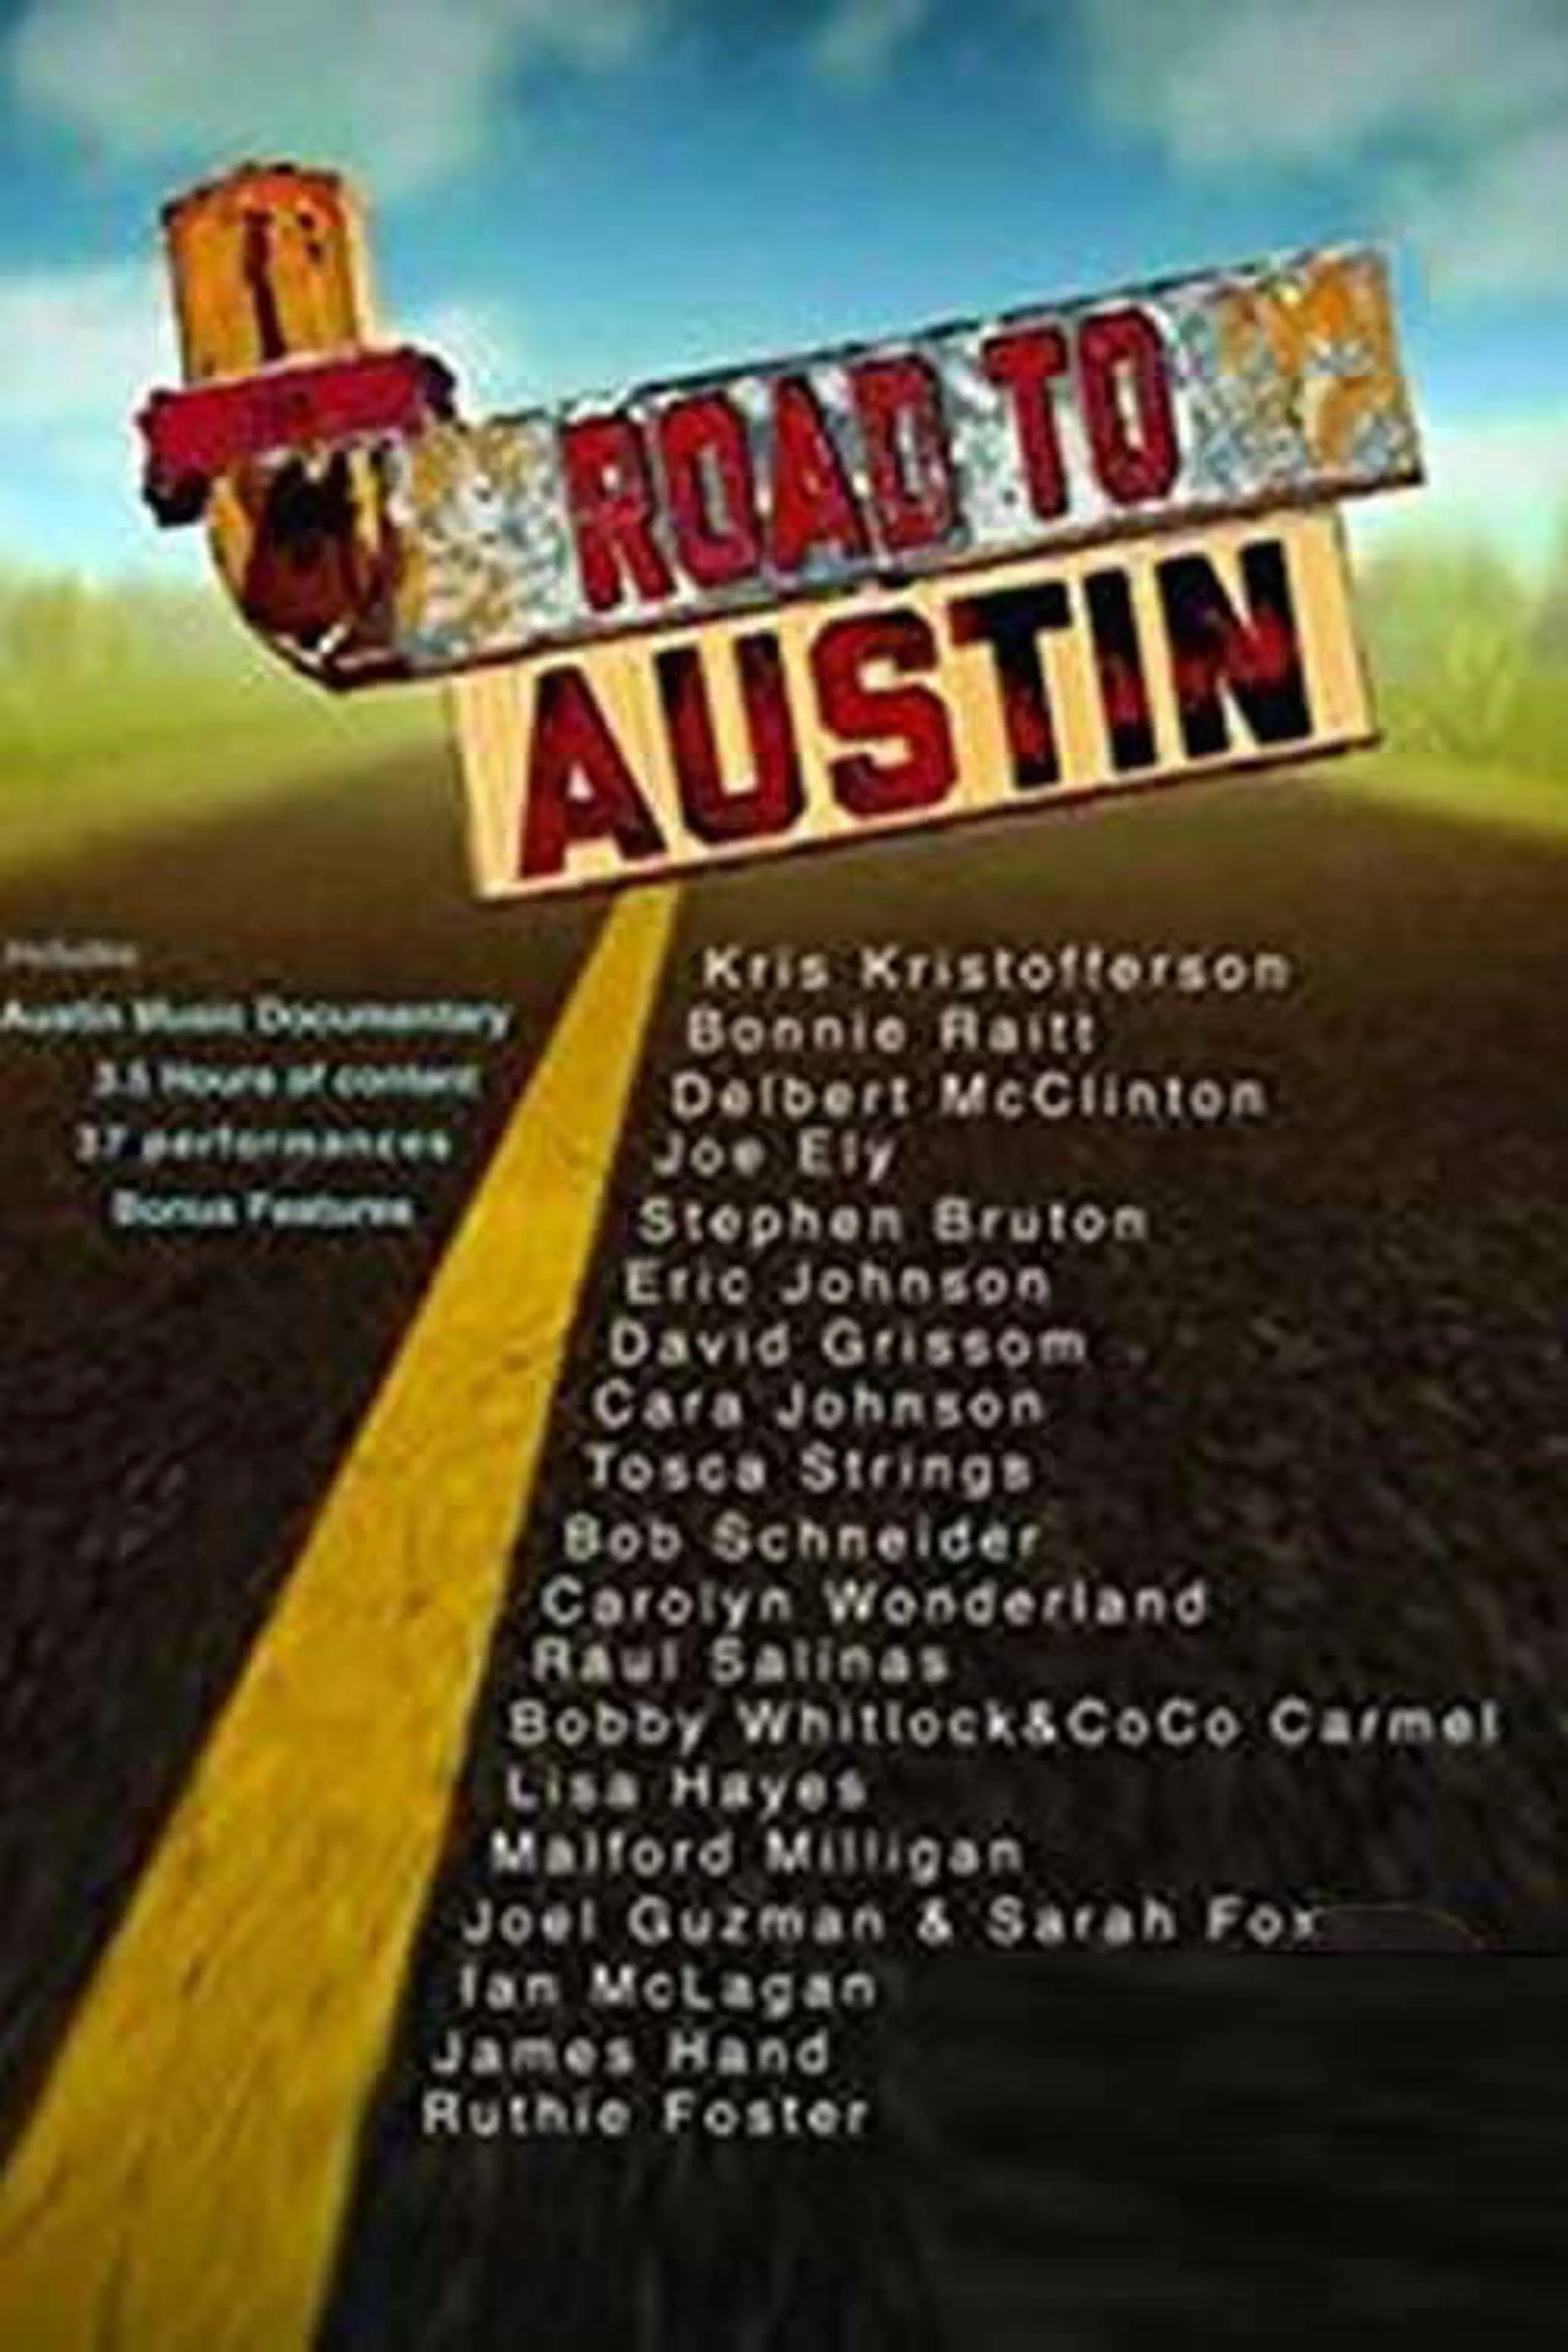 Road to Austin